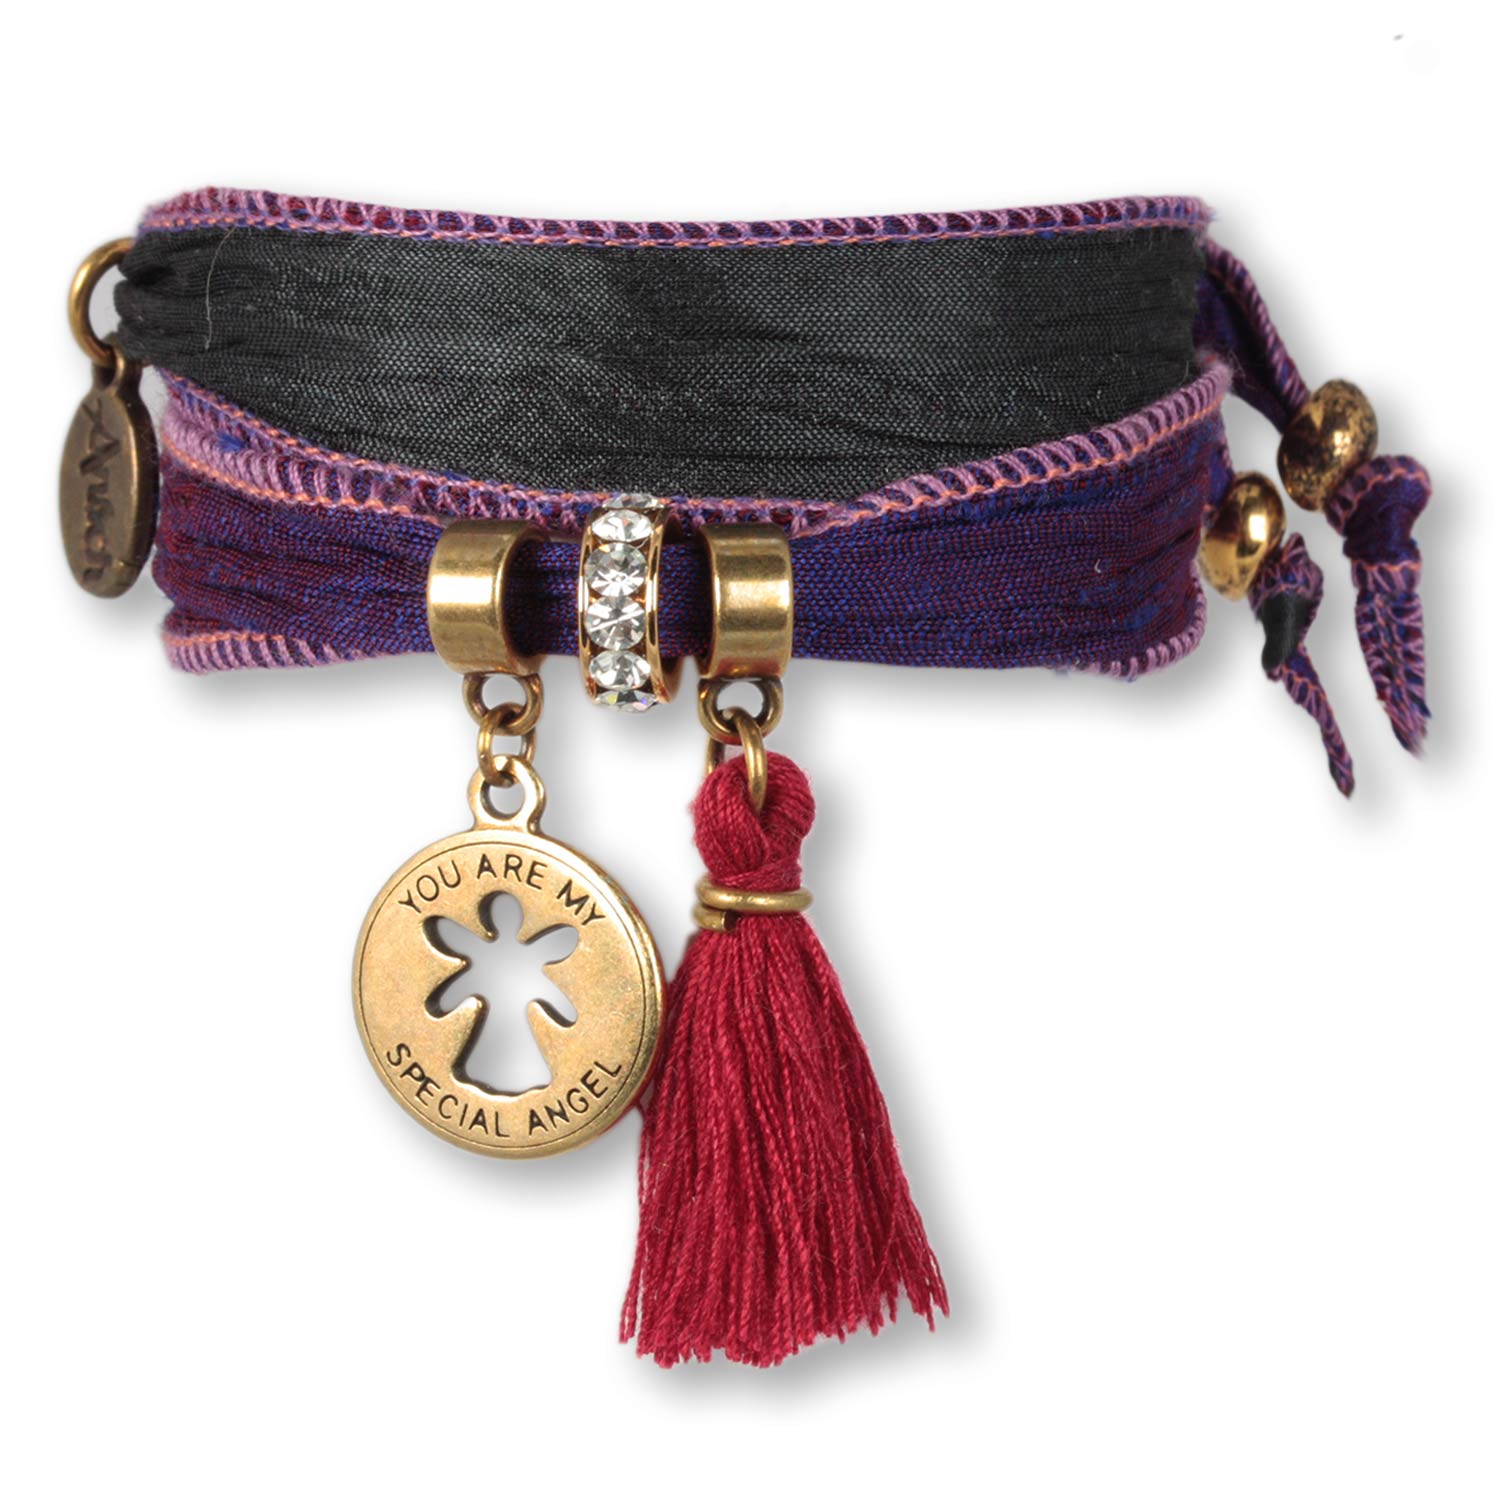 Velvet Purple - Special Angel friendship bracelet from indian saris